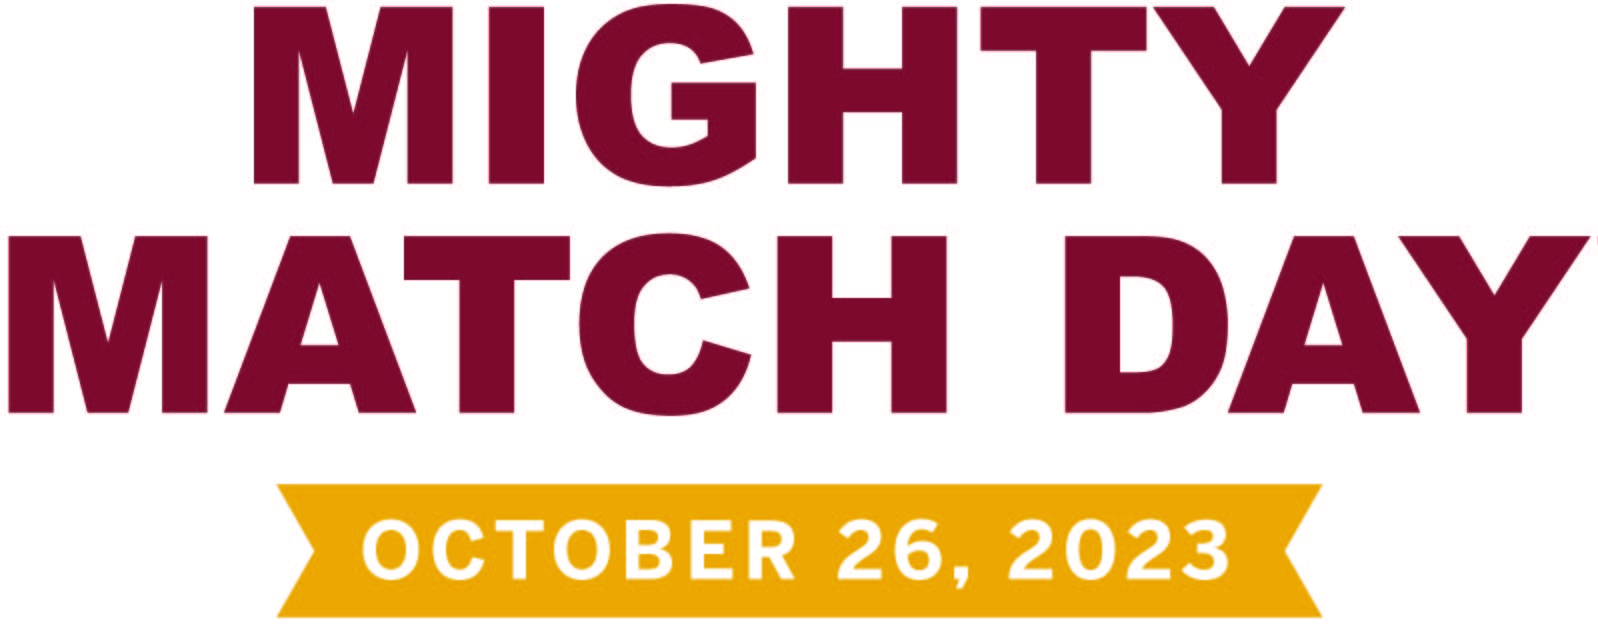 Mighty Match Day logo